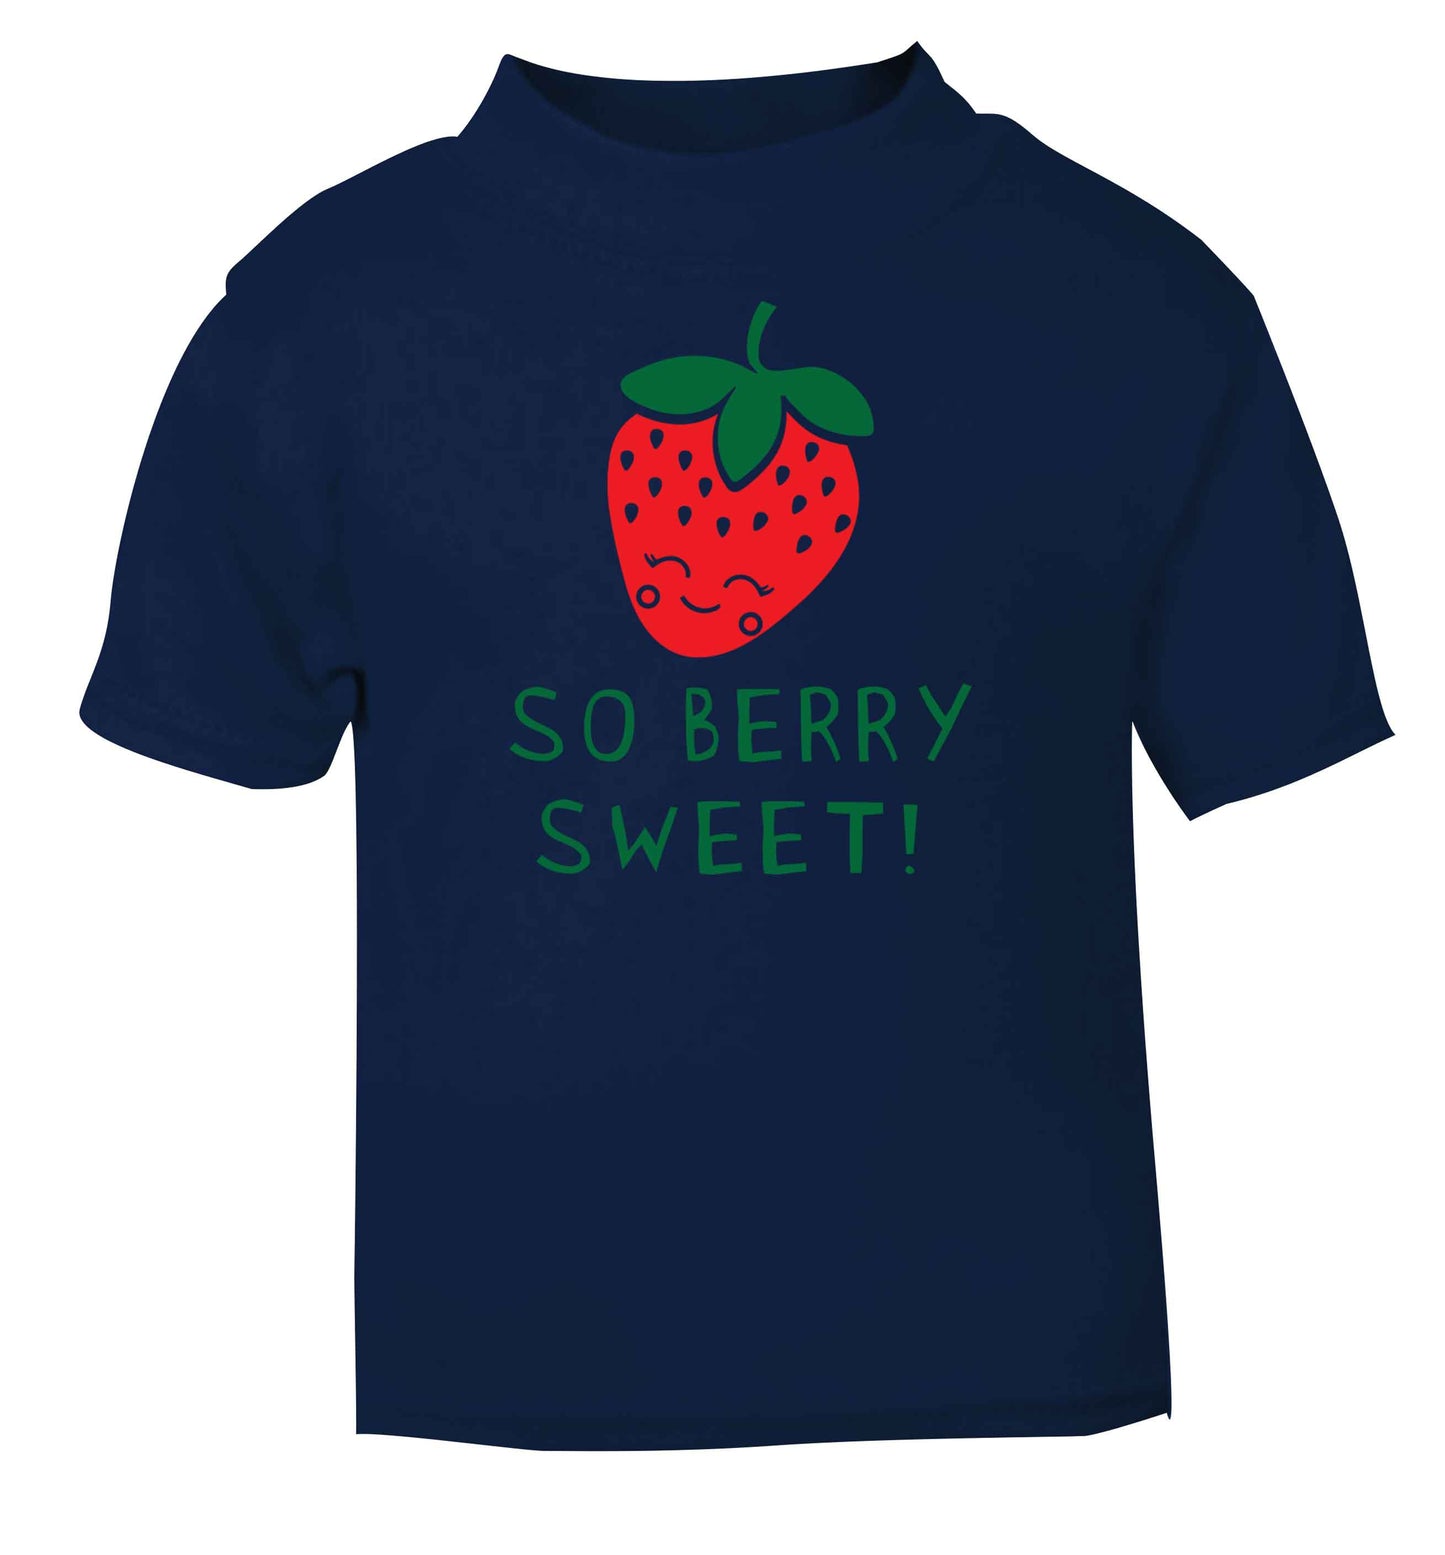 So berry sweet navy baby toddler Tshirt 2 Years